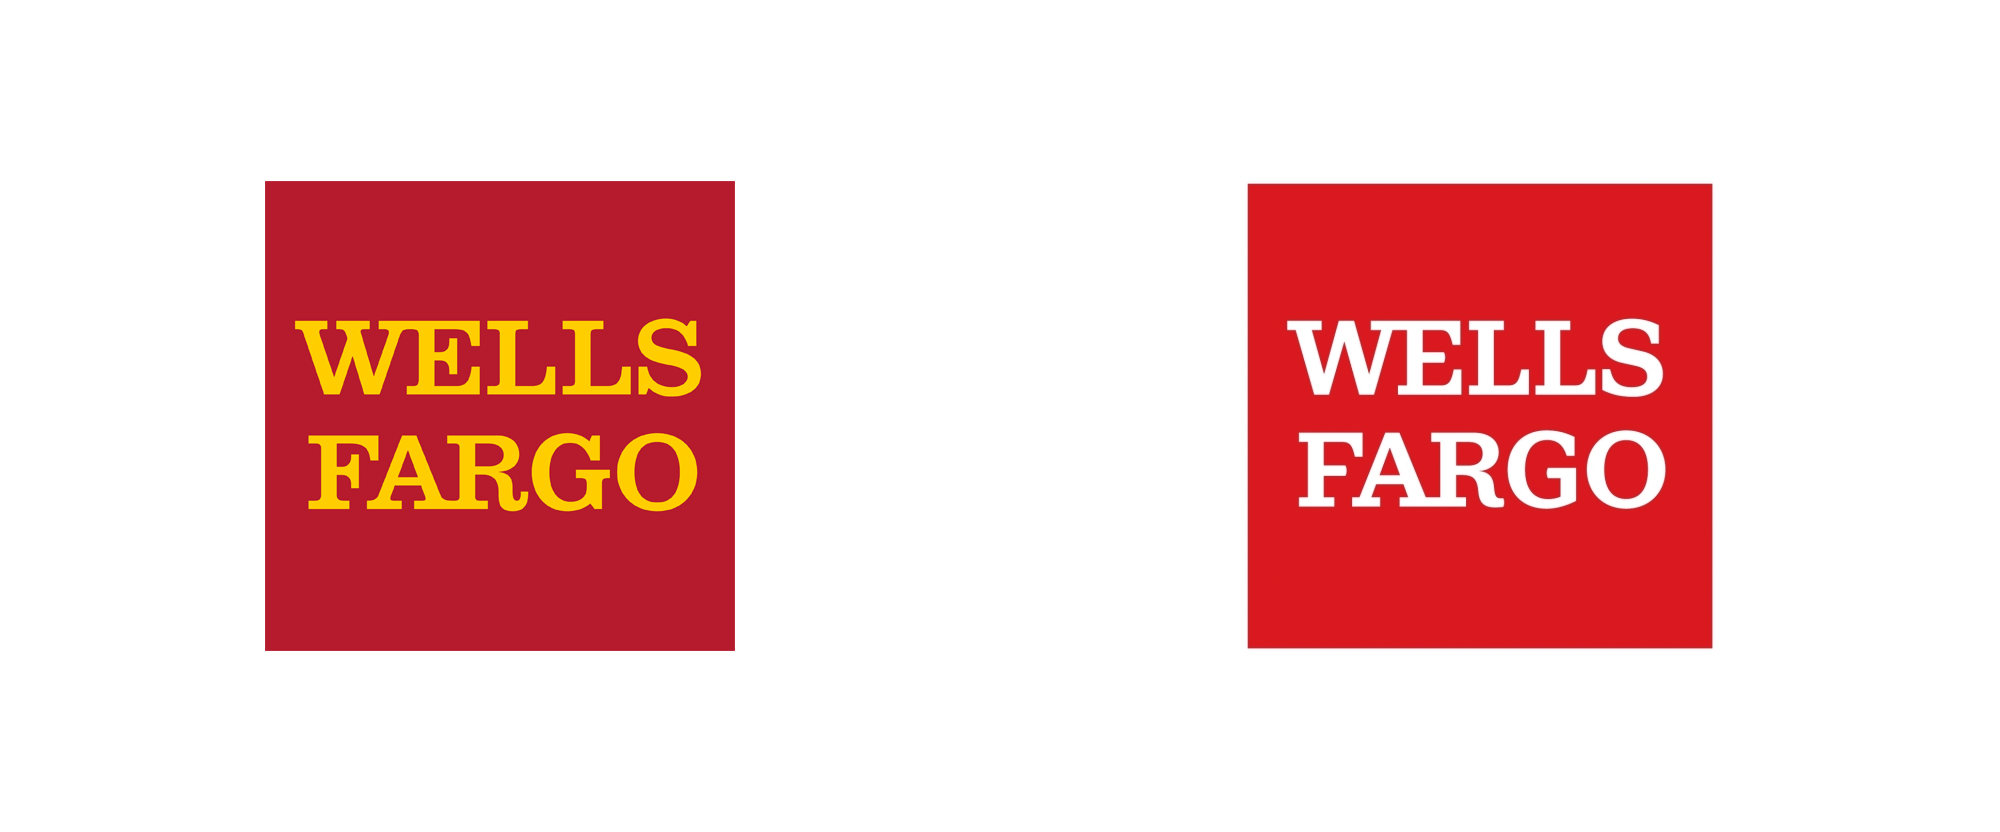 Fargo Logo - Brand New: New Logo and Stagecoach for Wells Fargo